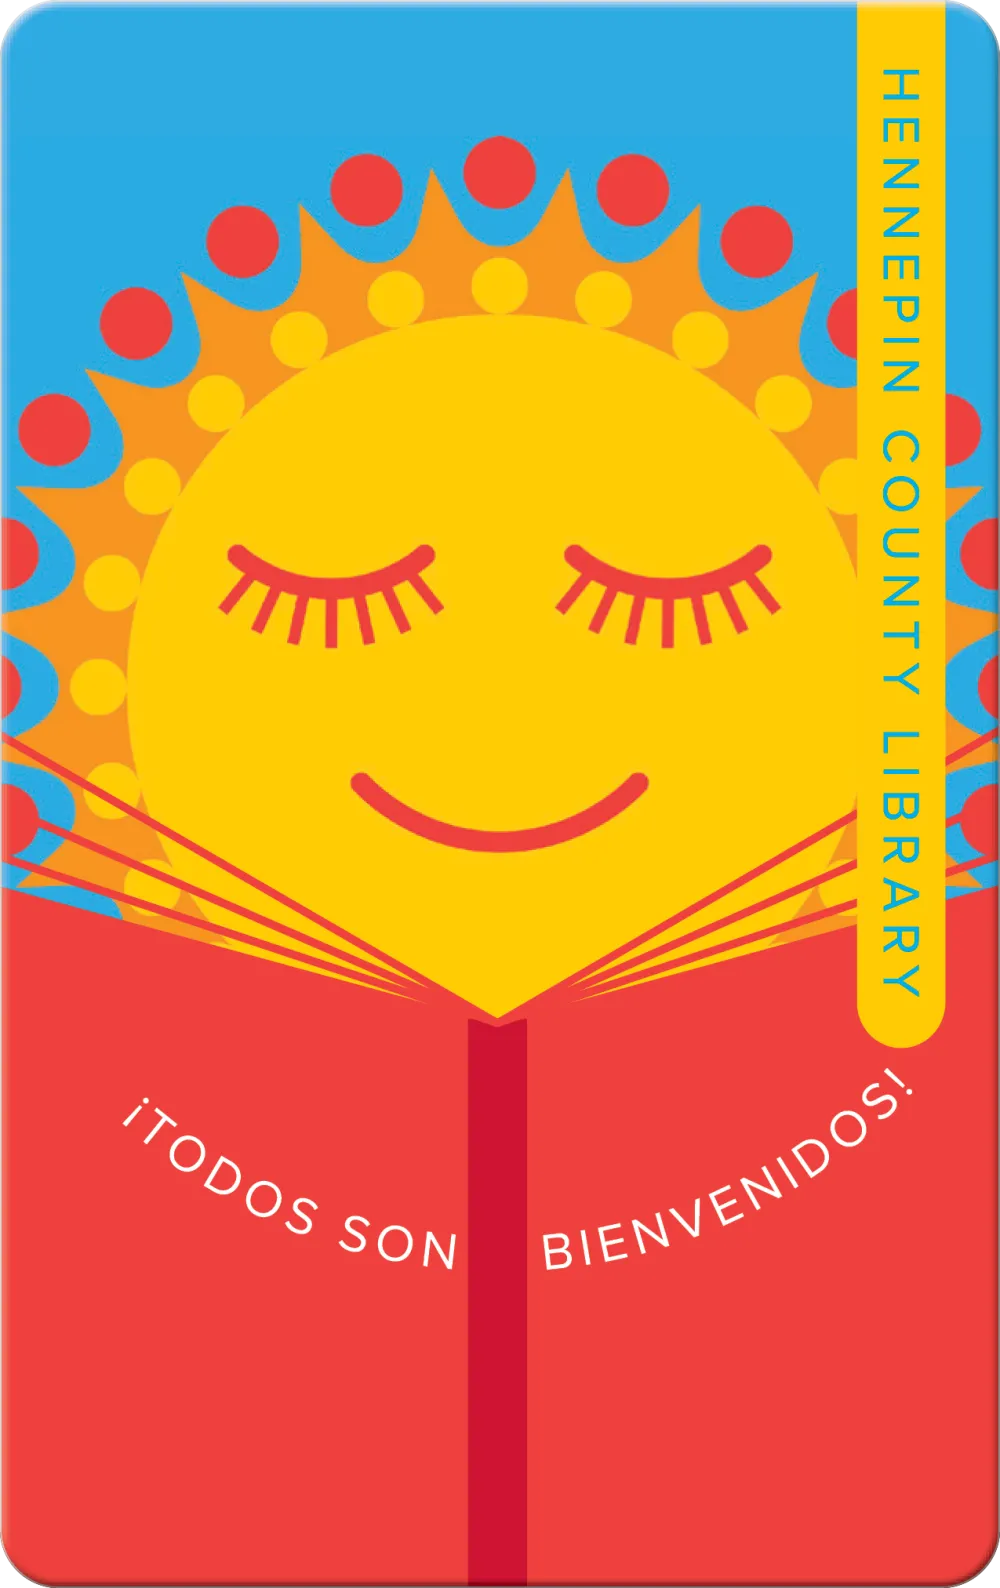 Latino library card design